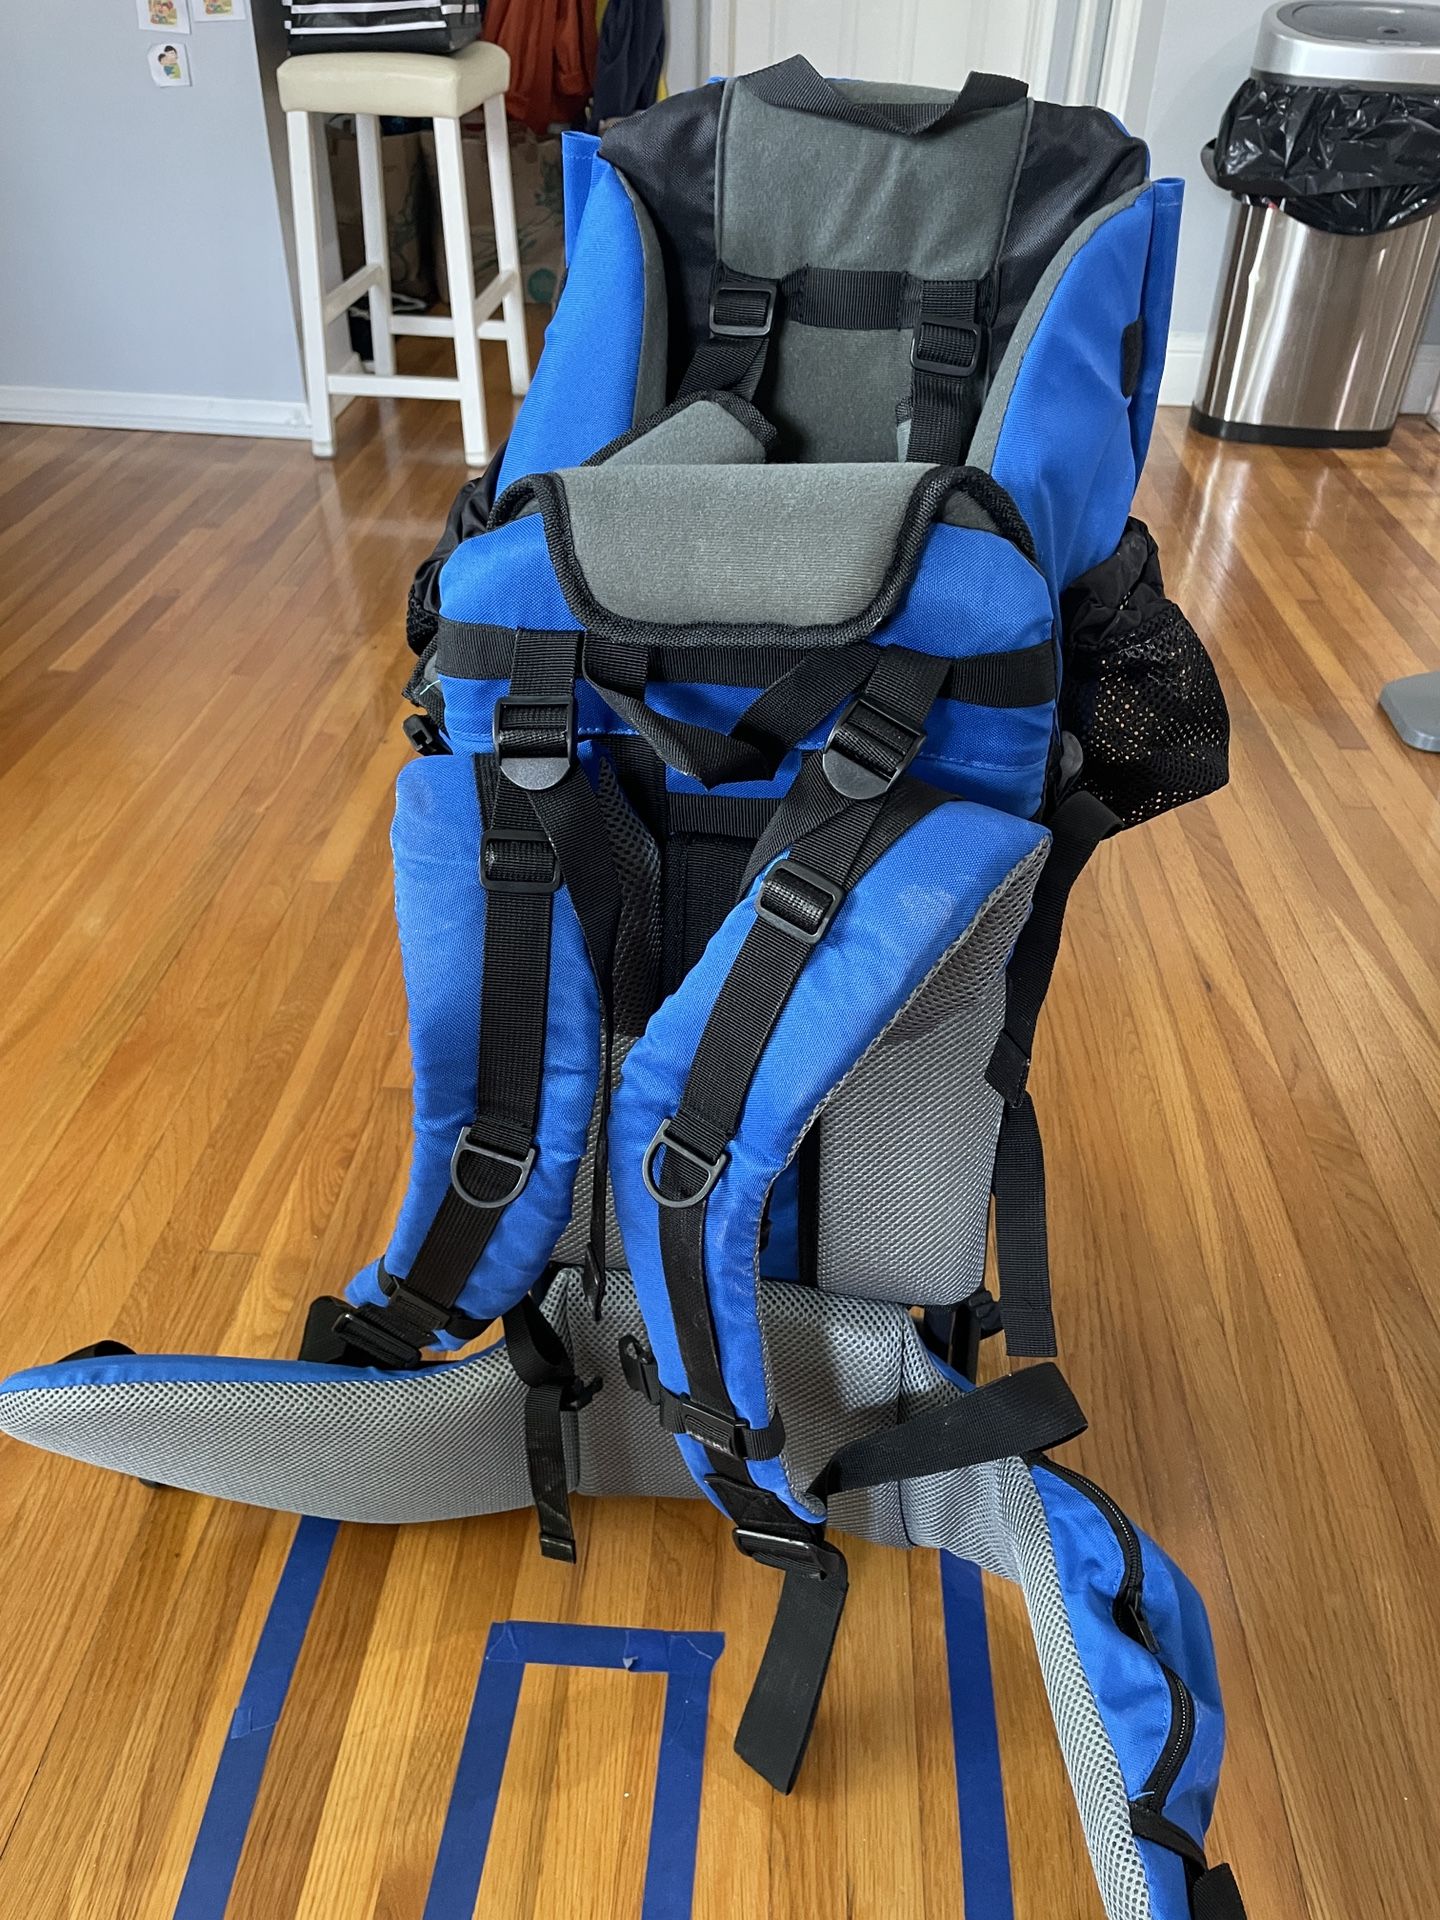 ClevrPlus Cross Country Baby Backpack Carrier, Blue, Toddler Hiking Backpack with Comfortable Seat, Adjustable Straps & Belt, Foldable Frame Lightweig